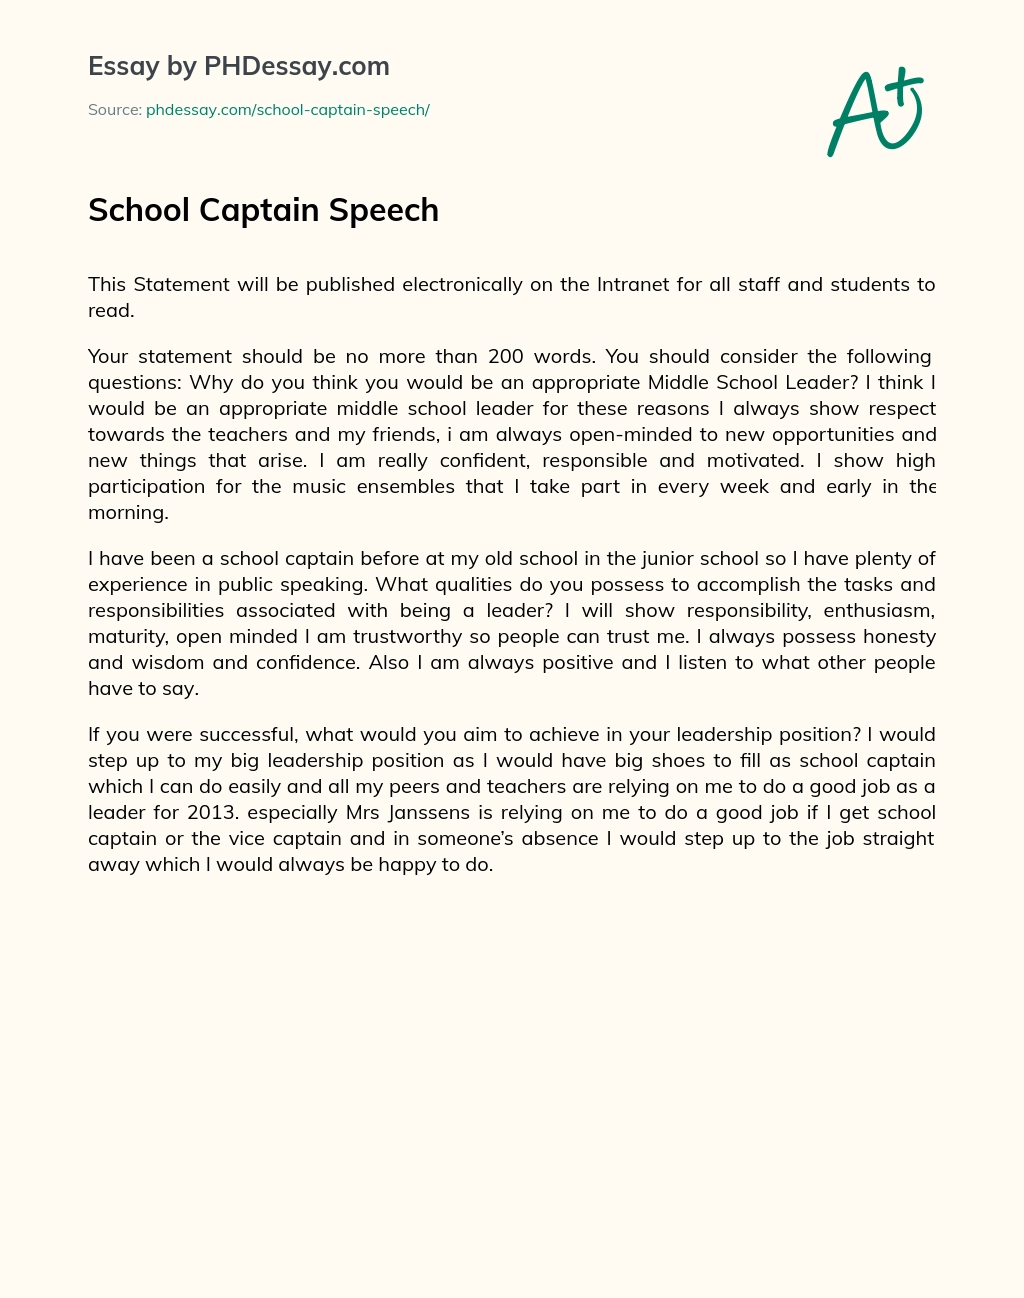 speech on becoming school vice captain